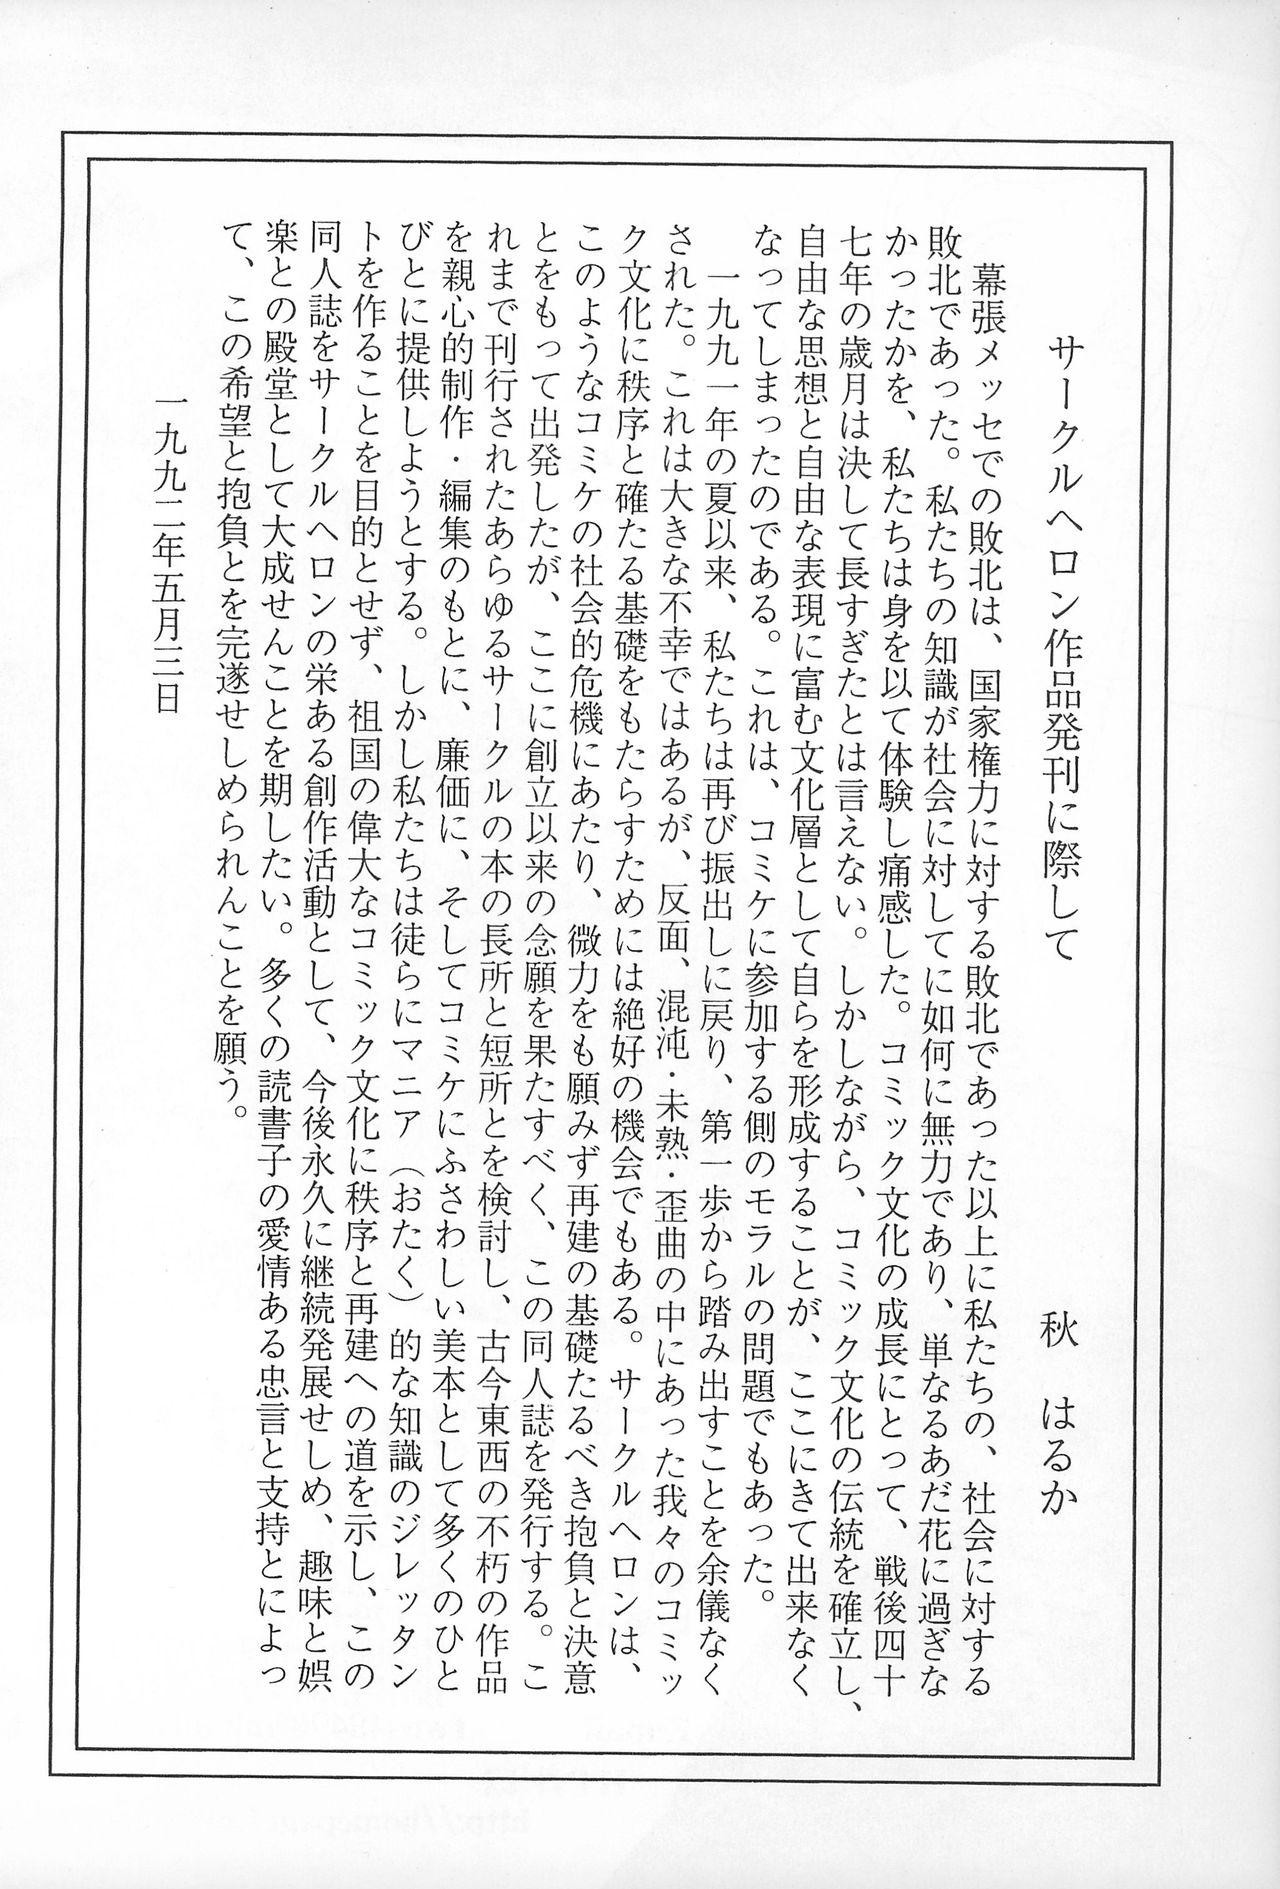 Highheels Rokushin Gattai - Magewappa 13 - Mon colle knights Latex - Page 53